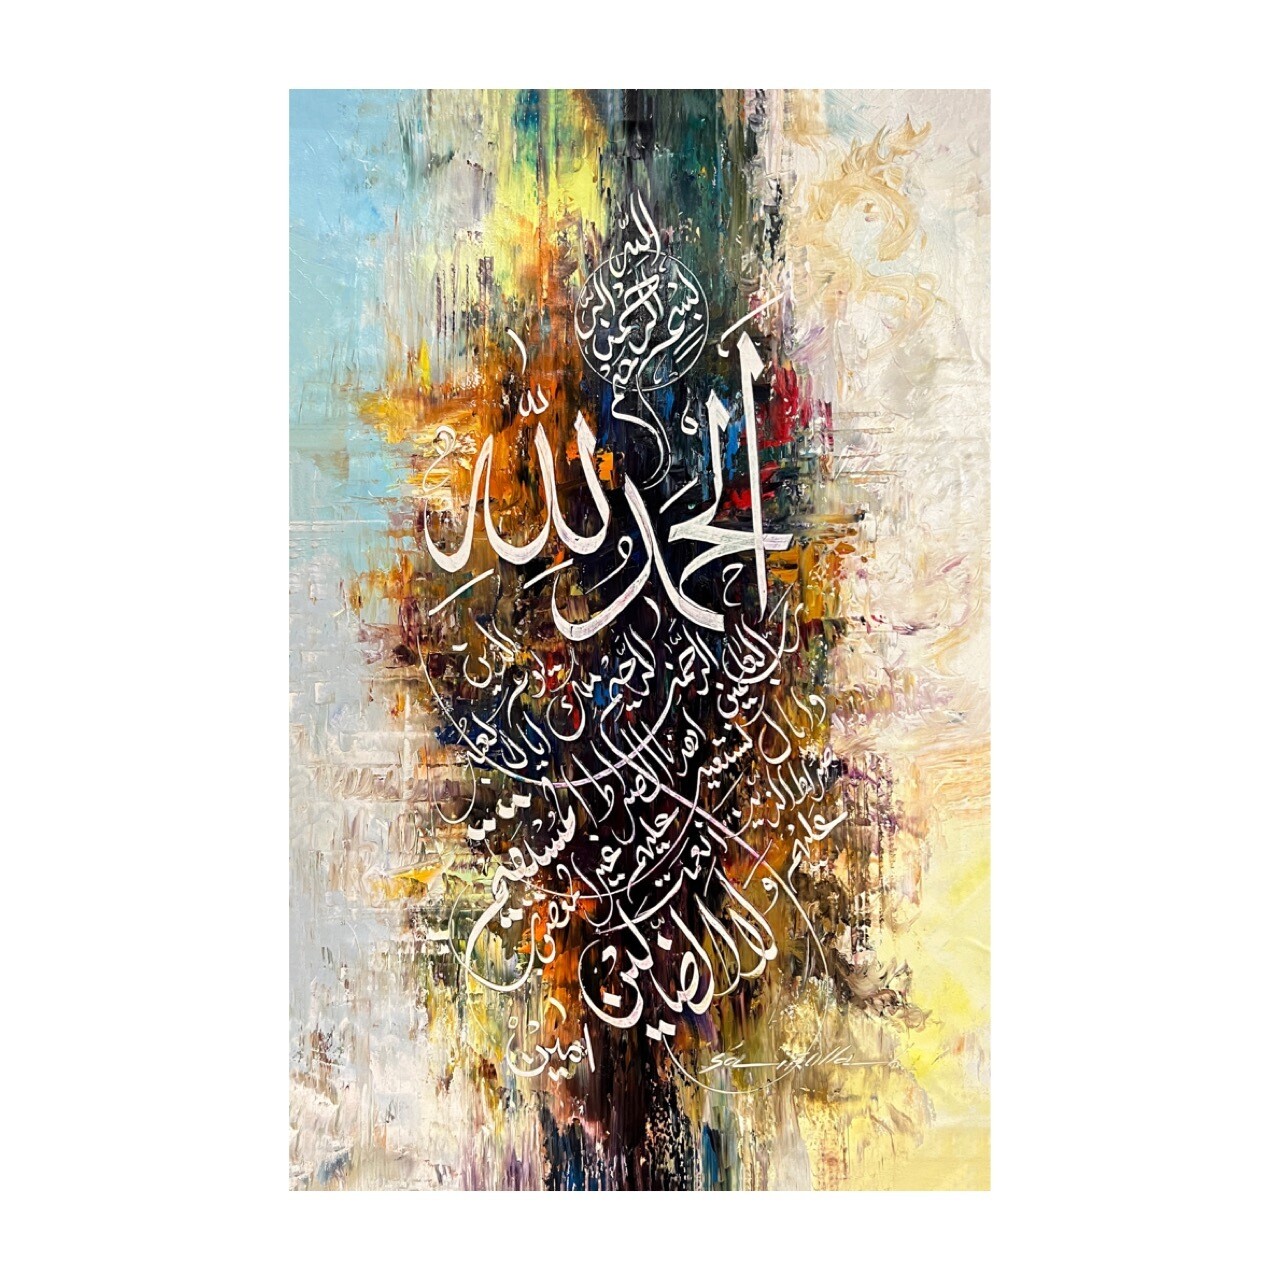 Surah Al Fatiha The Opening - Original hand engraved knife calligraphy painting